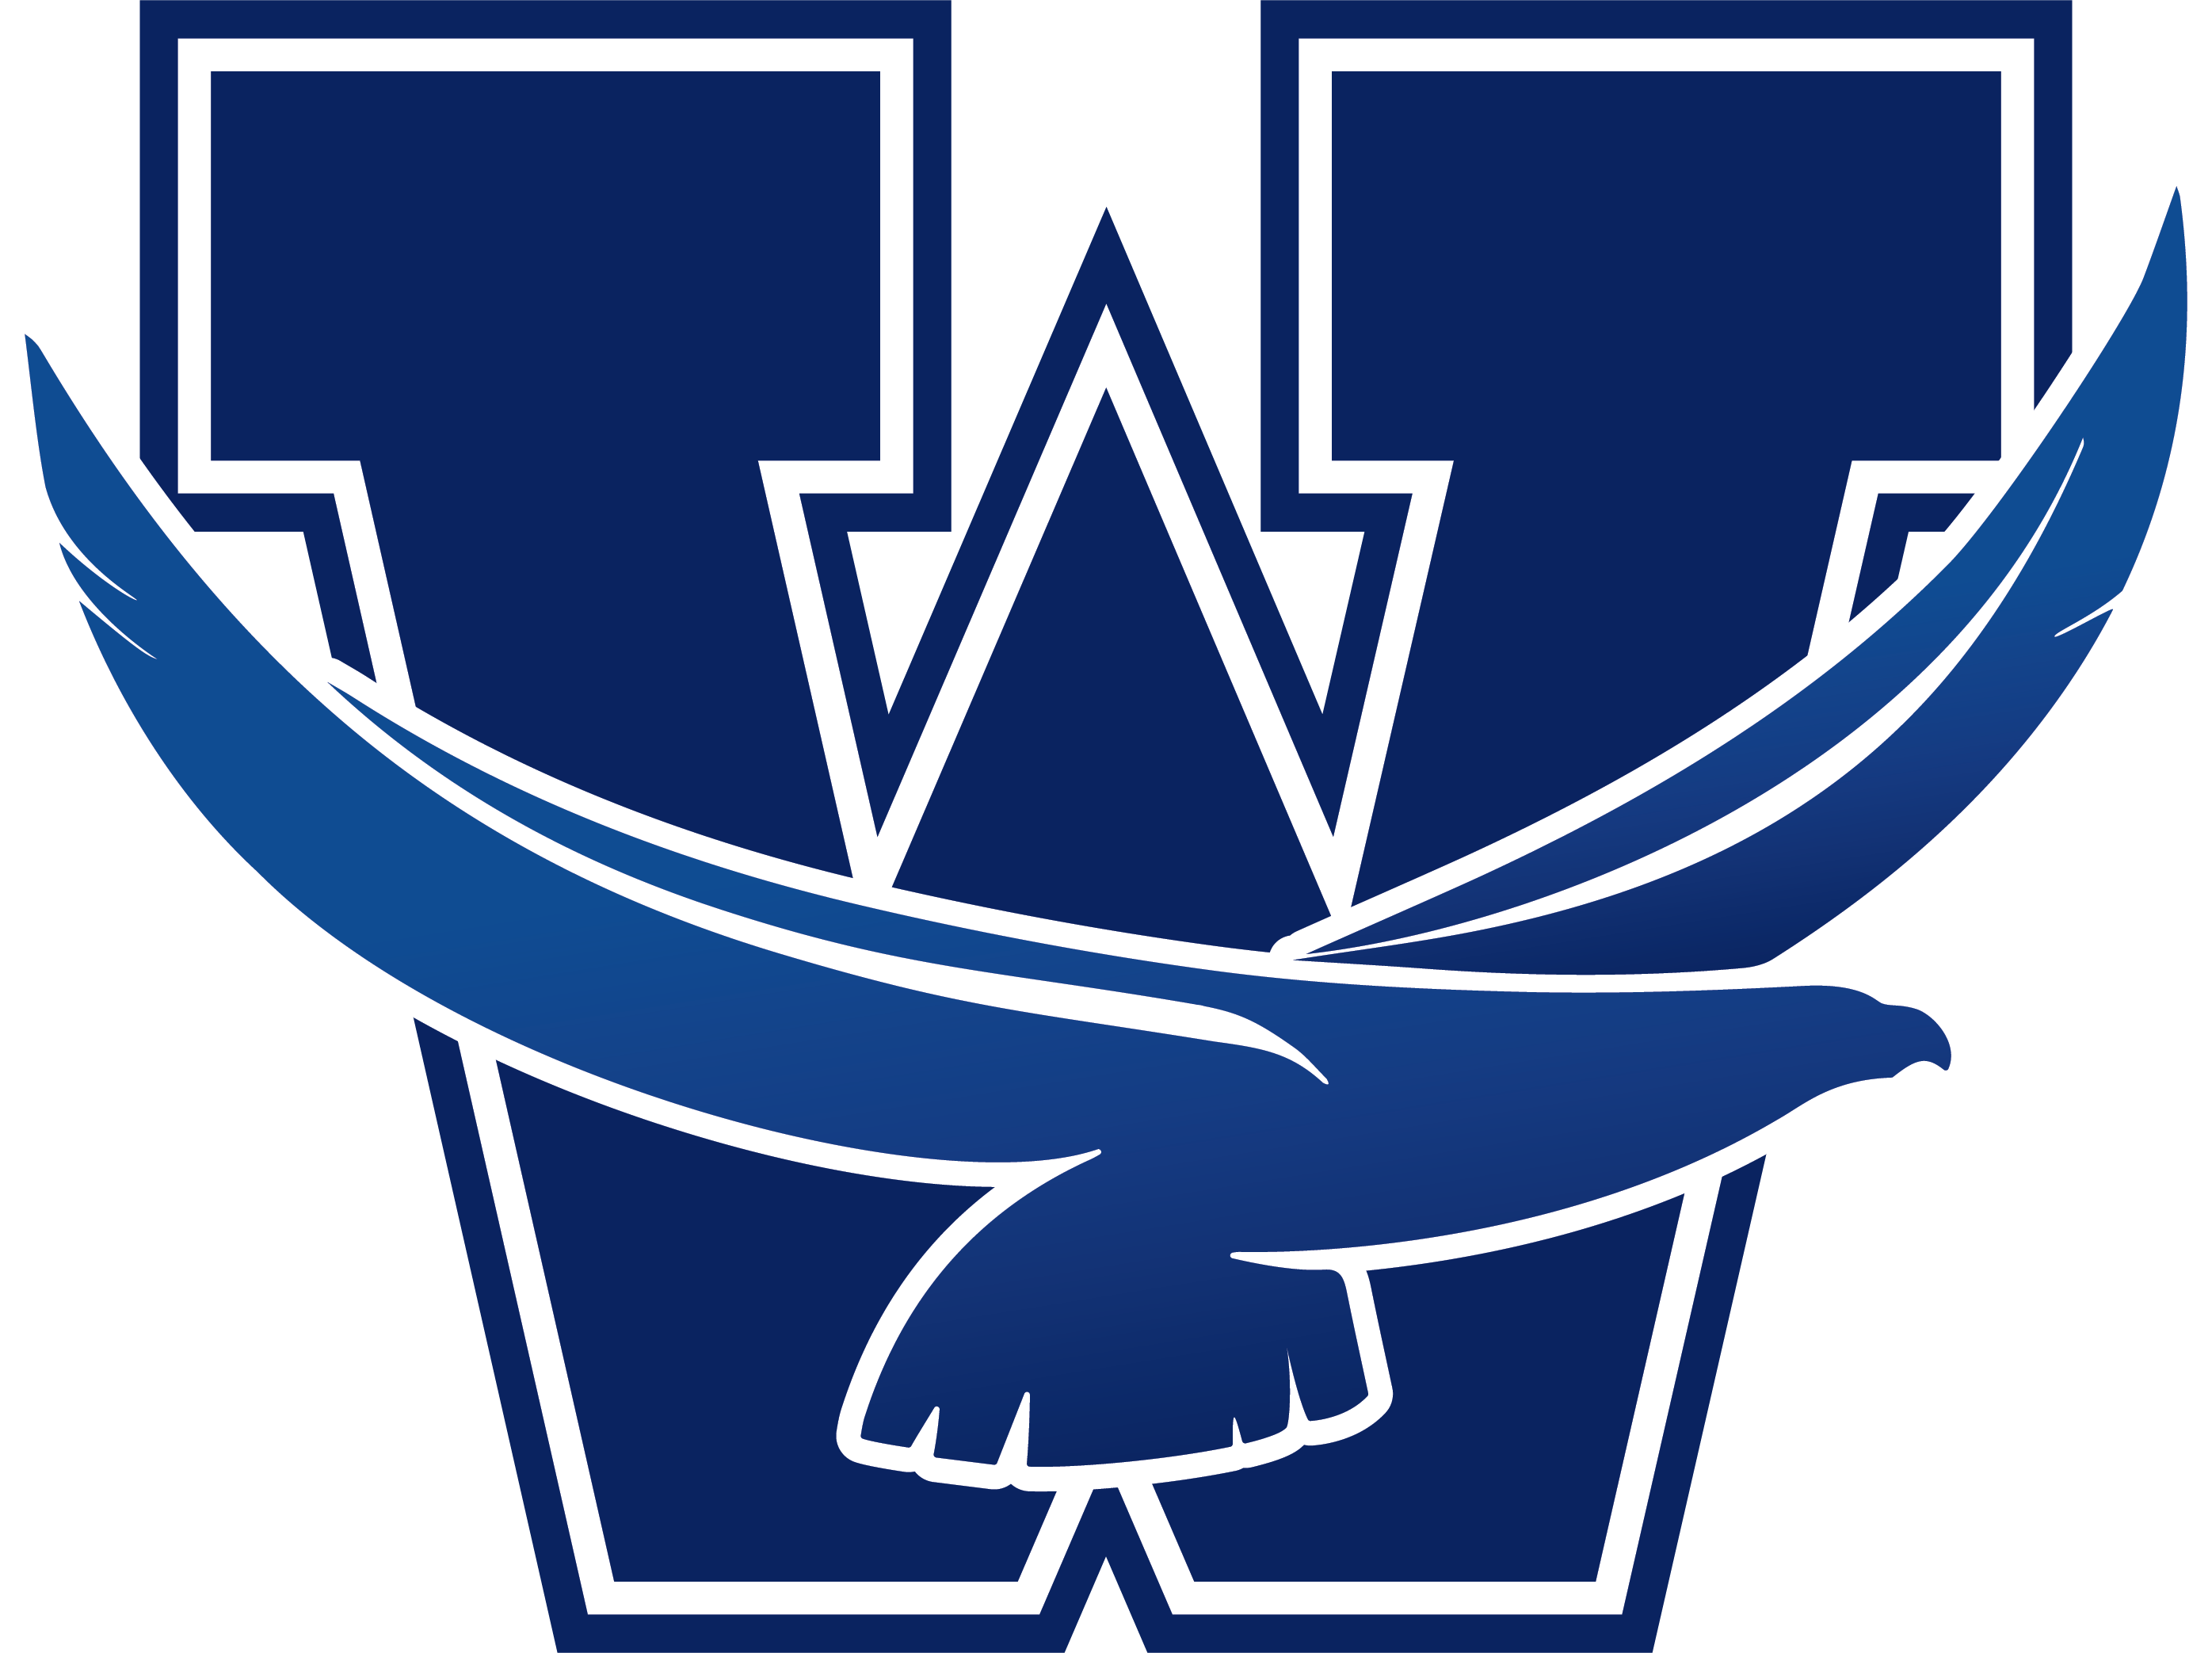 Washington logo